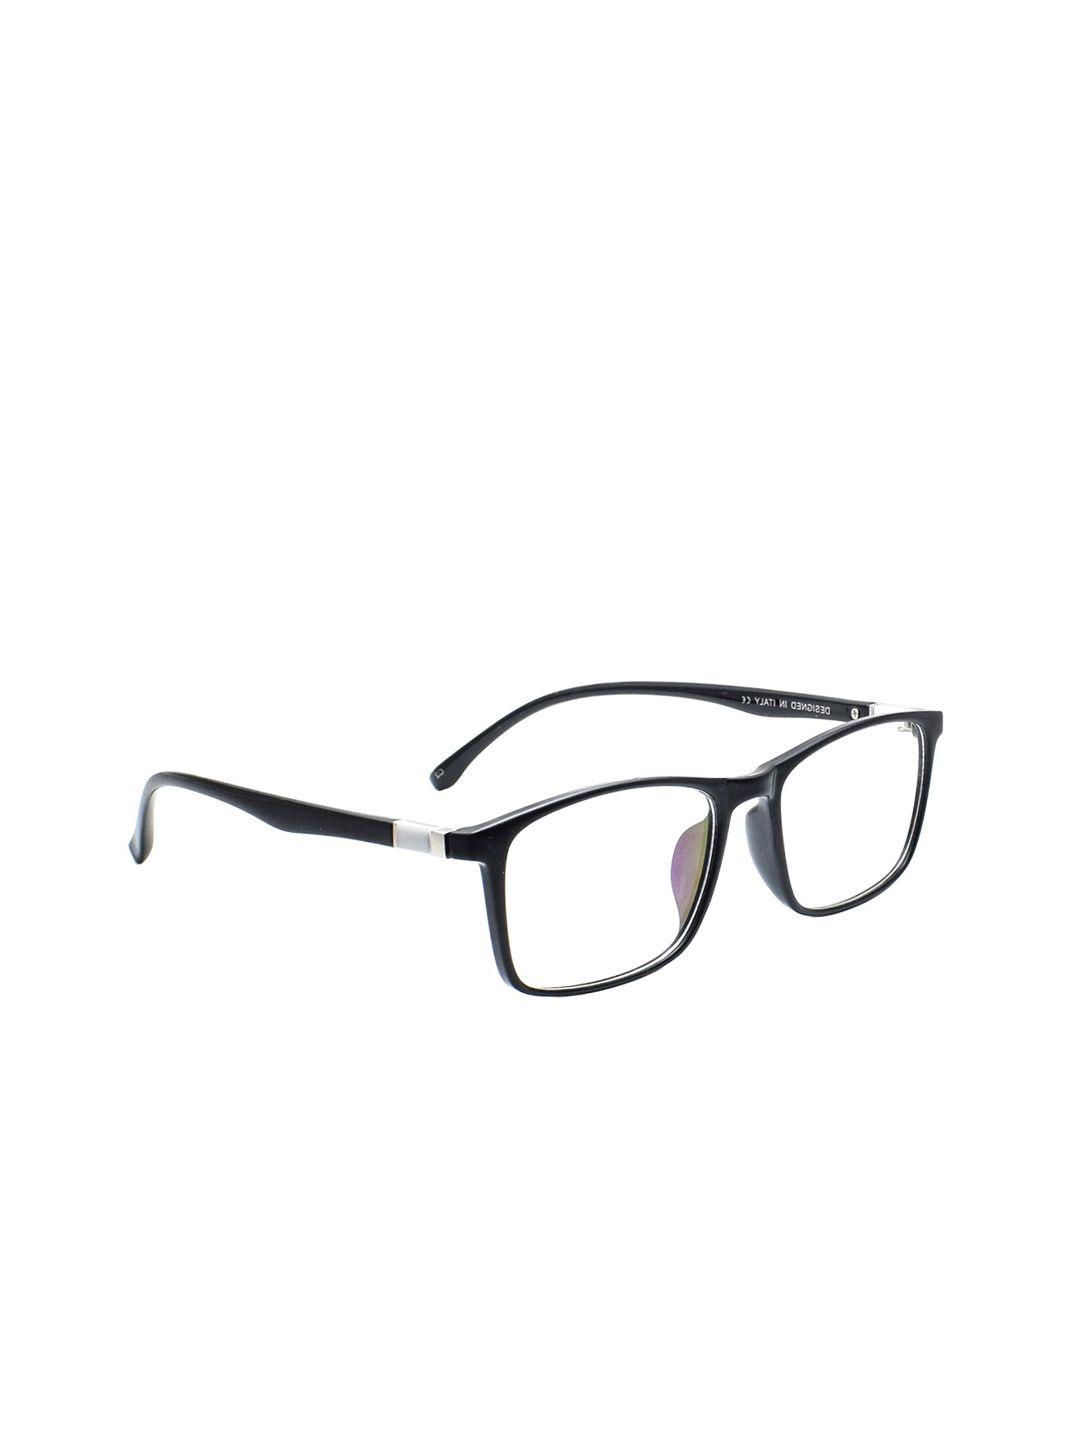 peter jones eyewear unisex black full rim rectangle anti glare frames 1808b-black